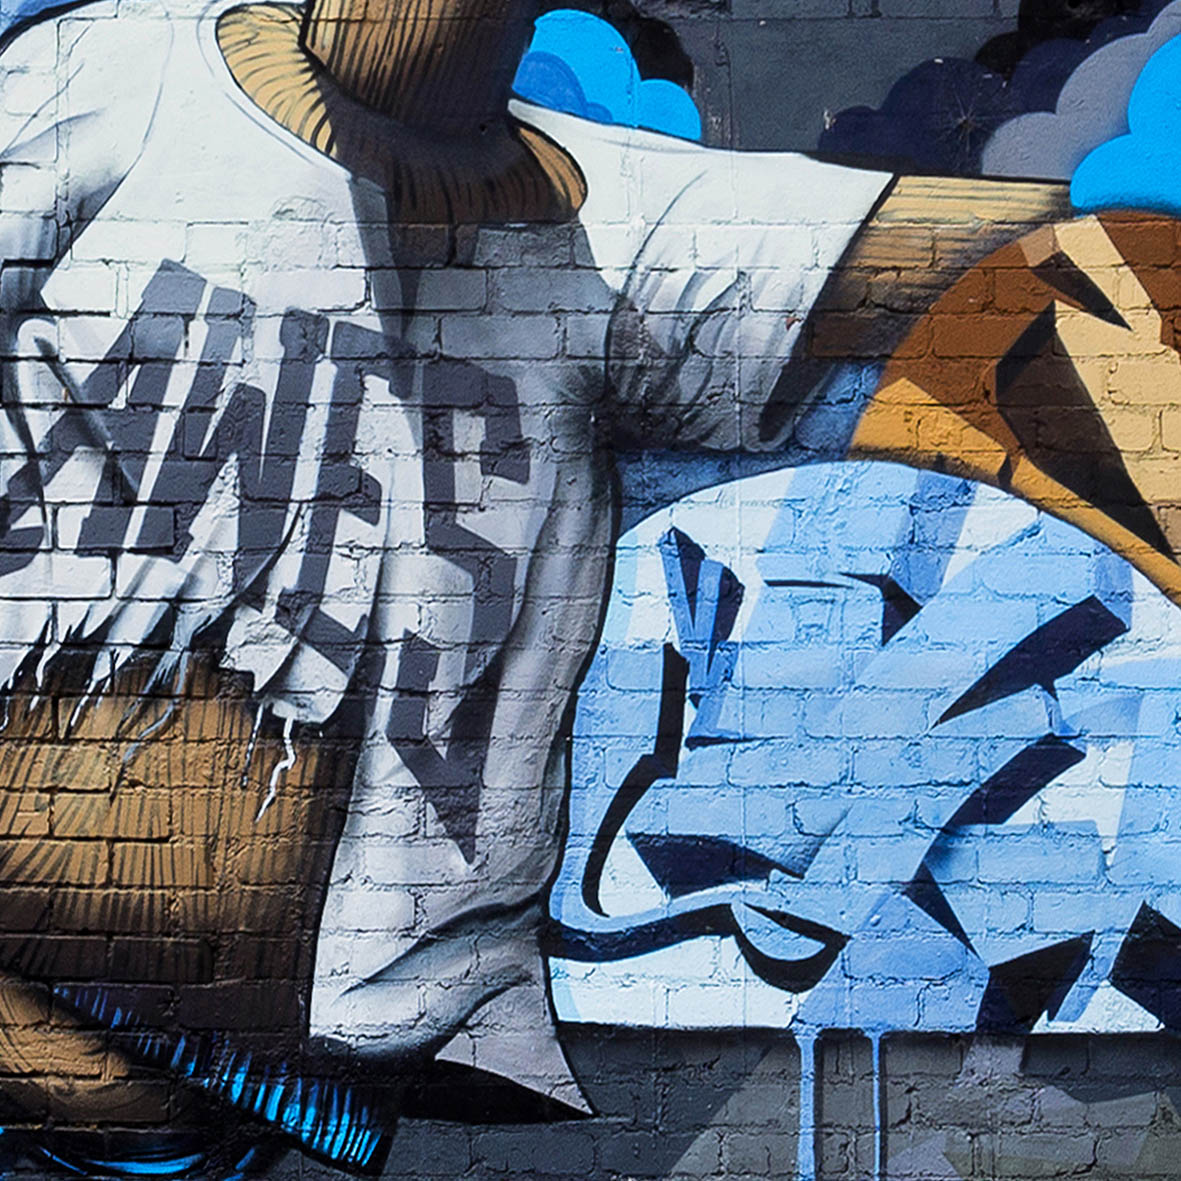 Spray Paint stencil graffiti art NYC Business Owl by